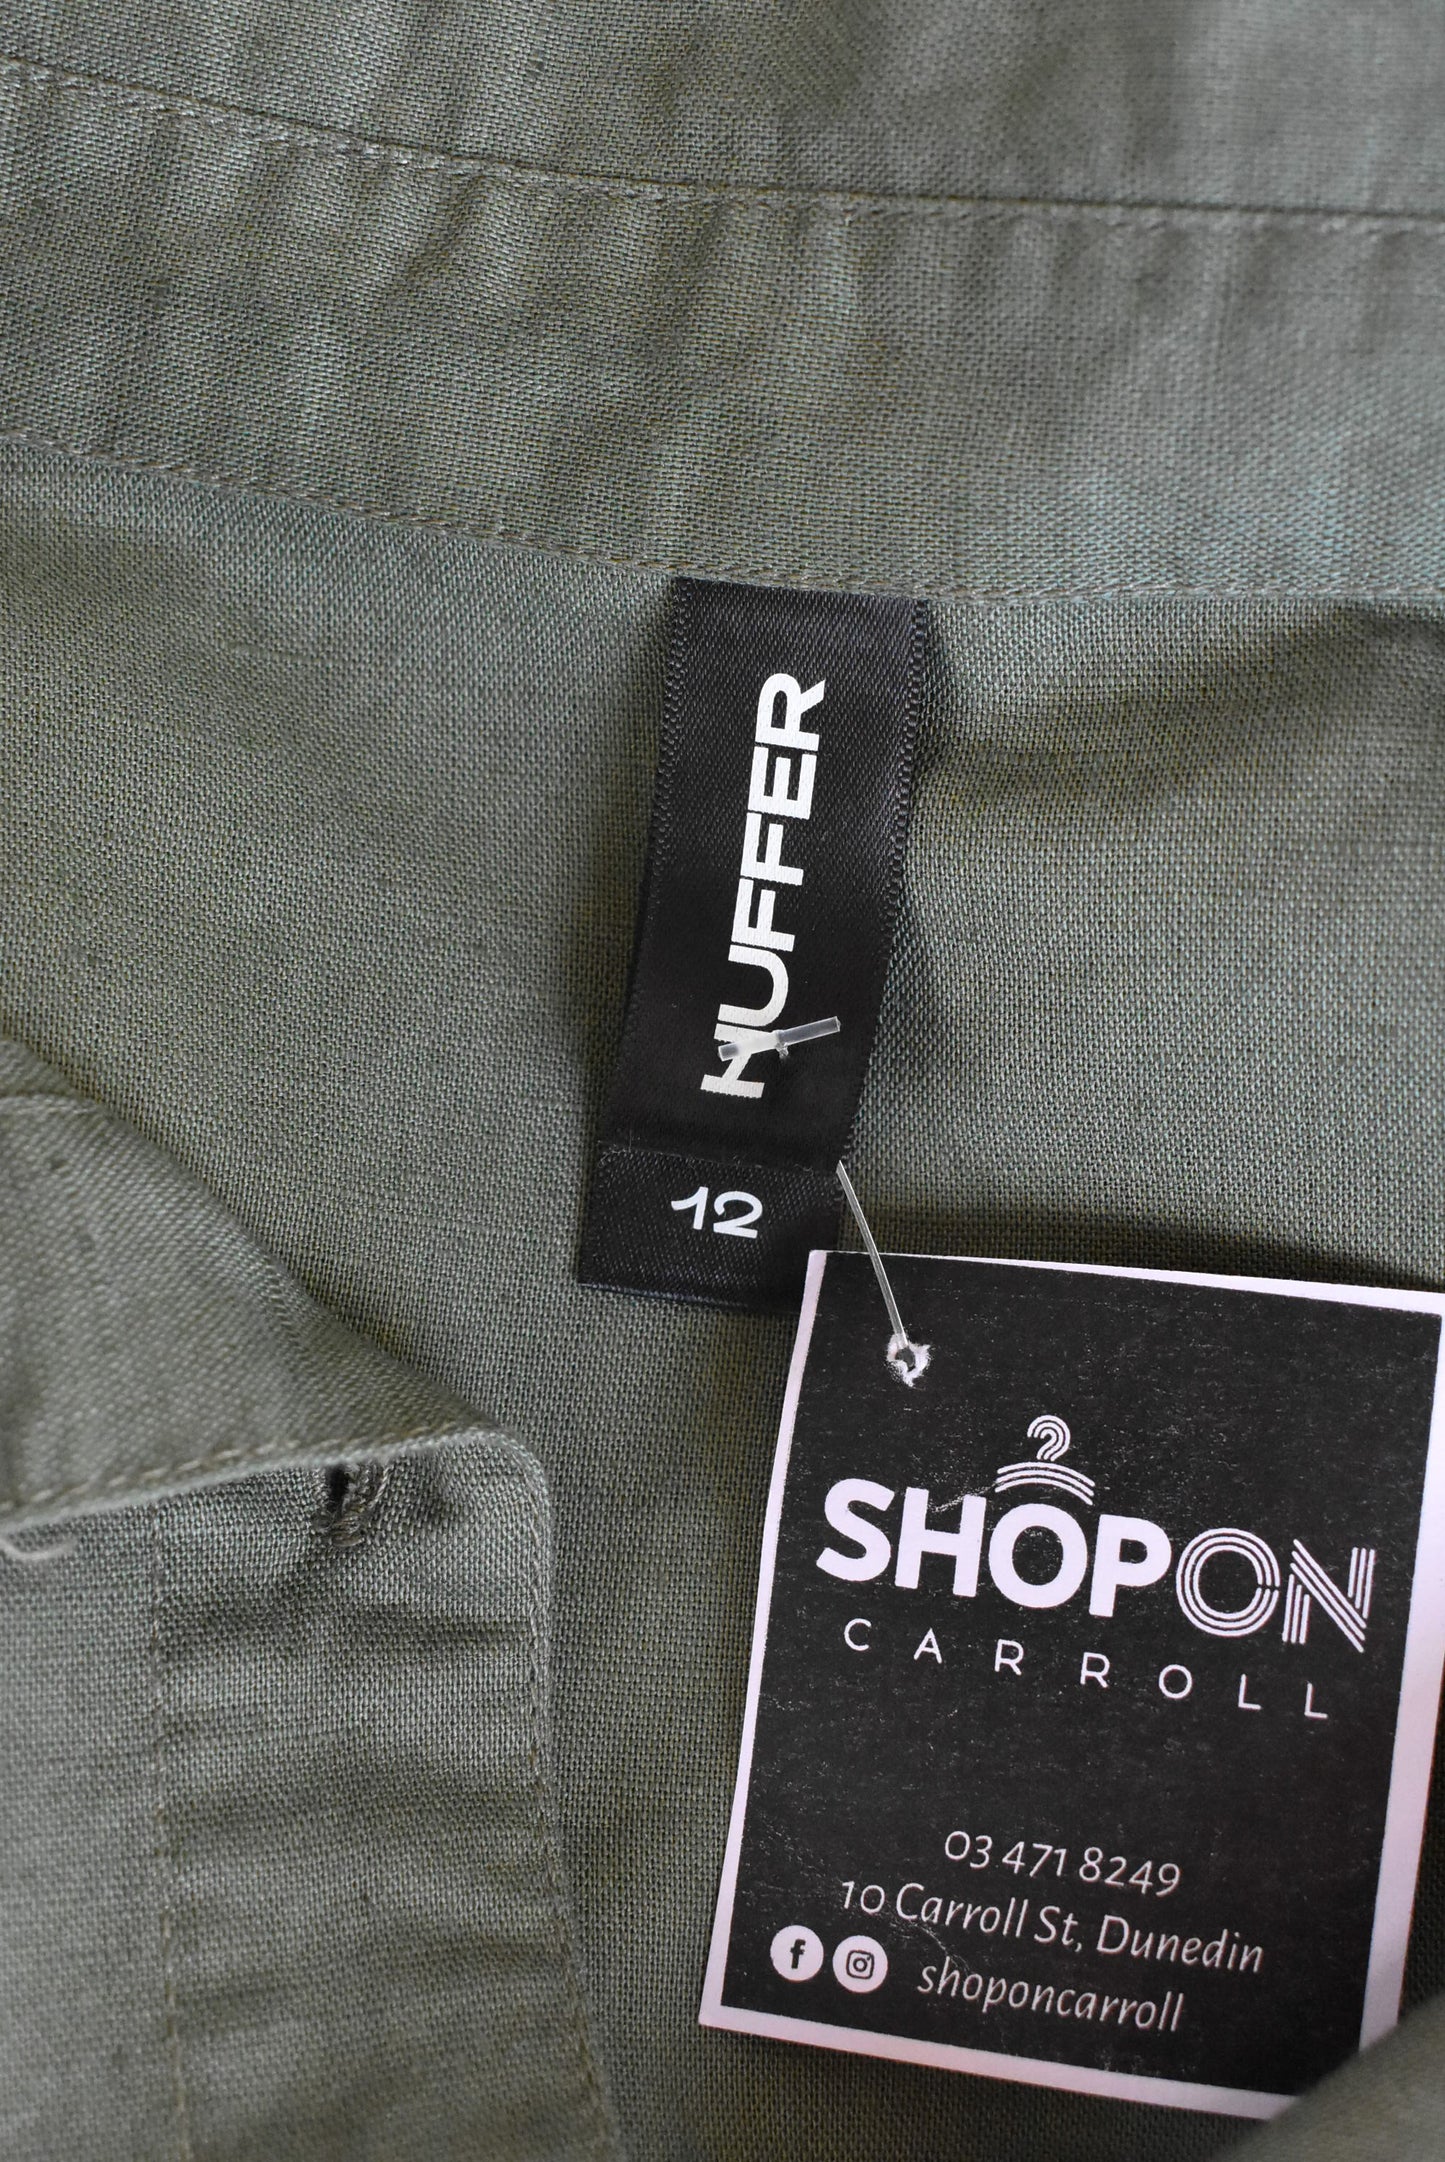 Huffer khaki green cropped cotton-linen shirt jacket, size 12